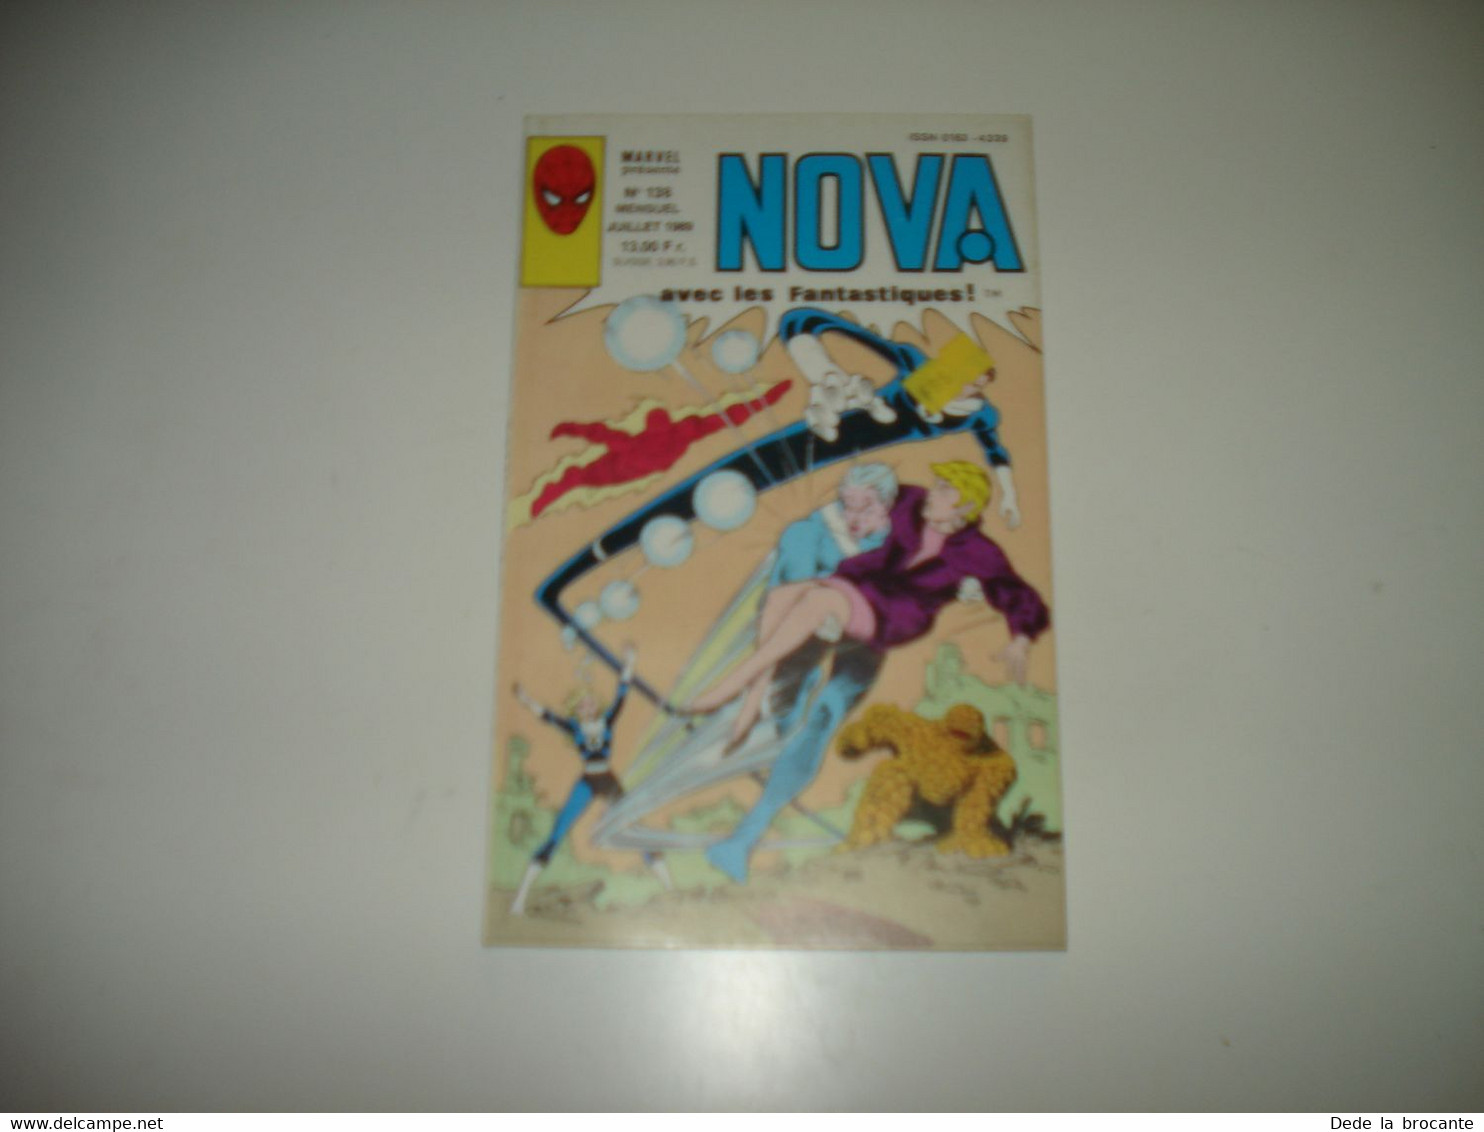 C22 / Spider Man Marvel Présente  NOVA  N° 138  SEMIC -  Juillet  1989 - Comme Neuf - Nova